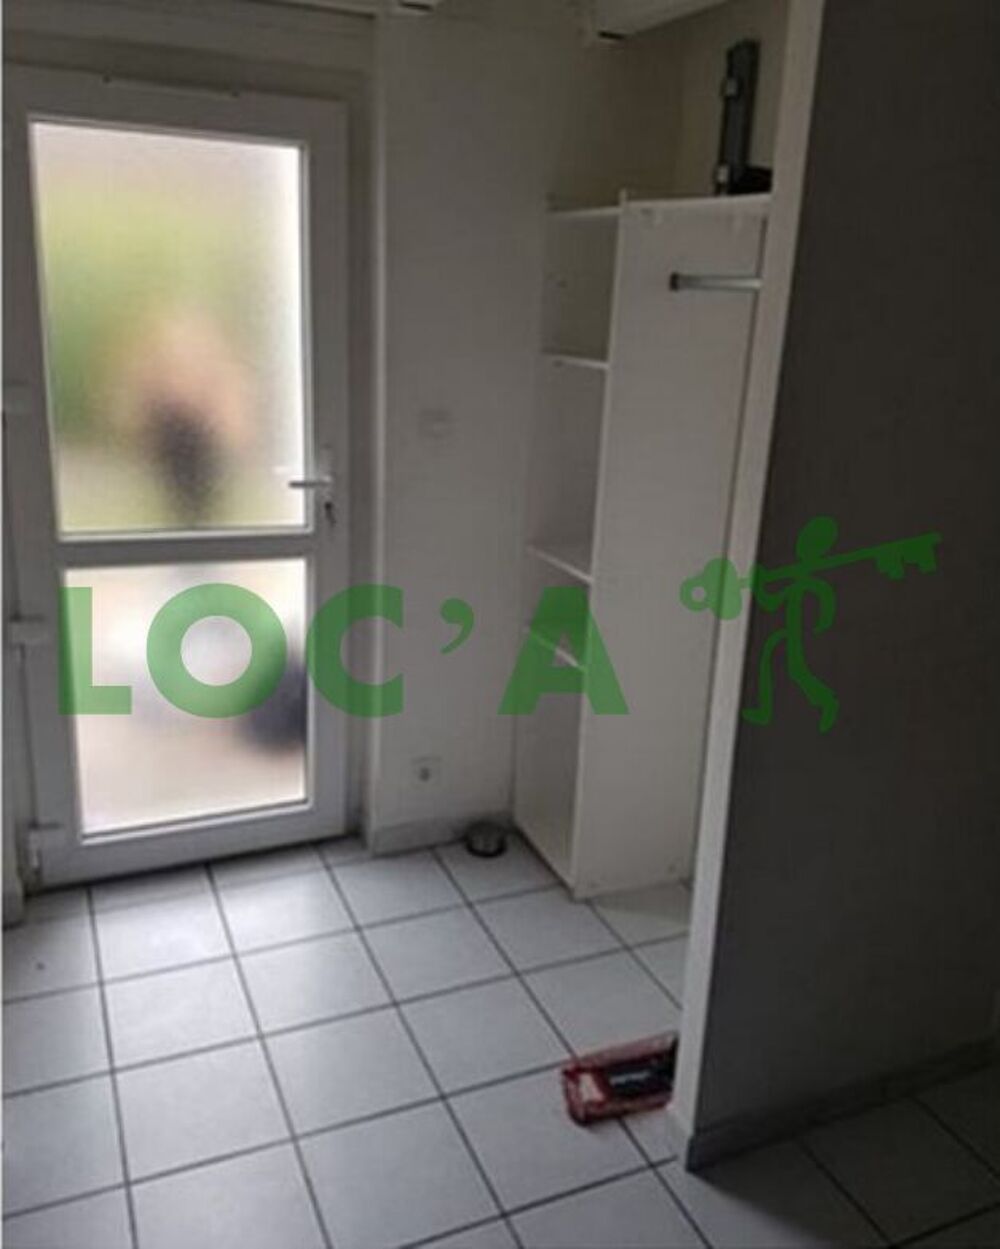 location Appartement - 2 pice(s) - 27 m Dijon (21000)